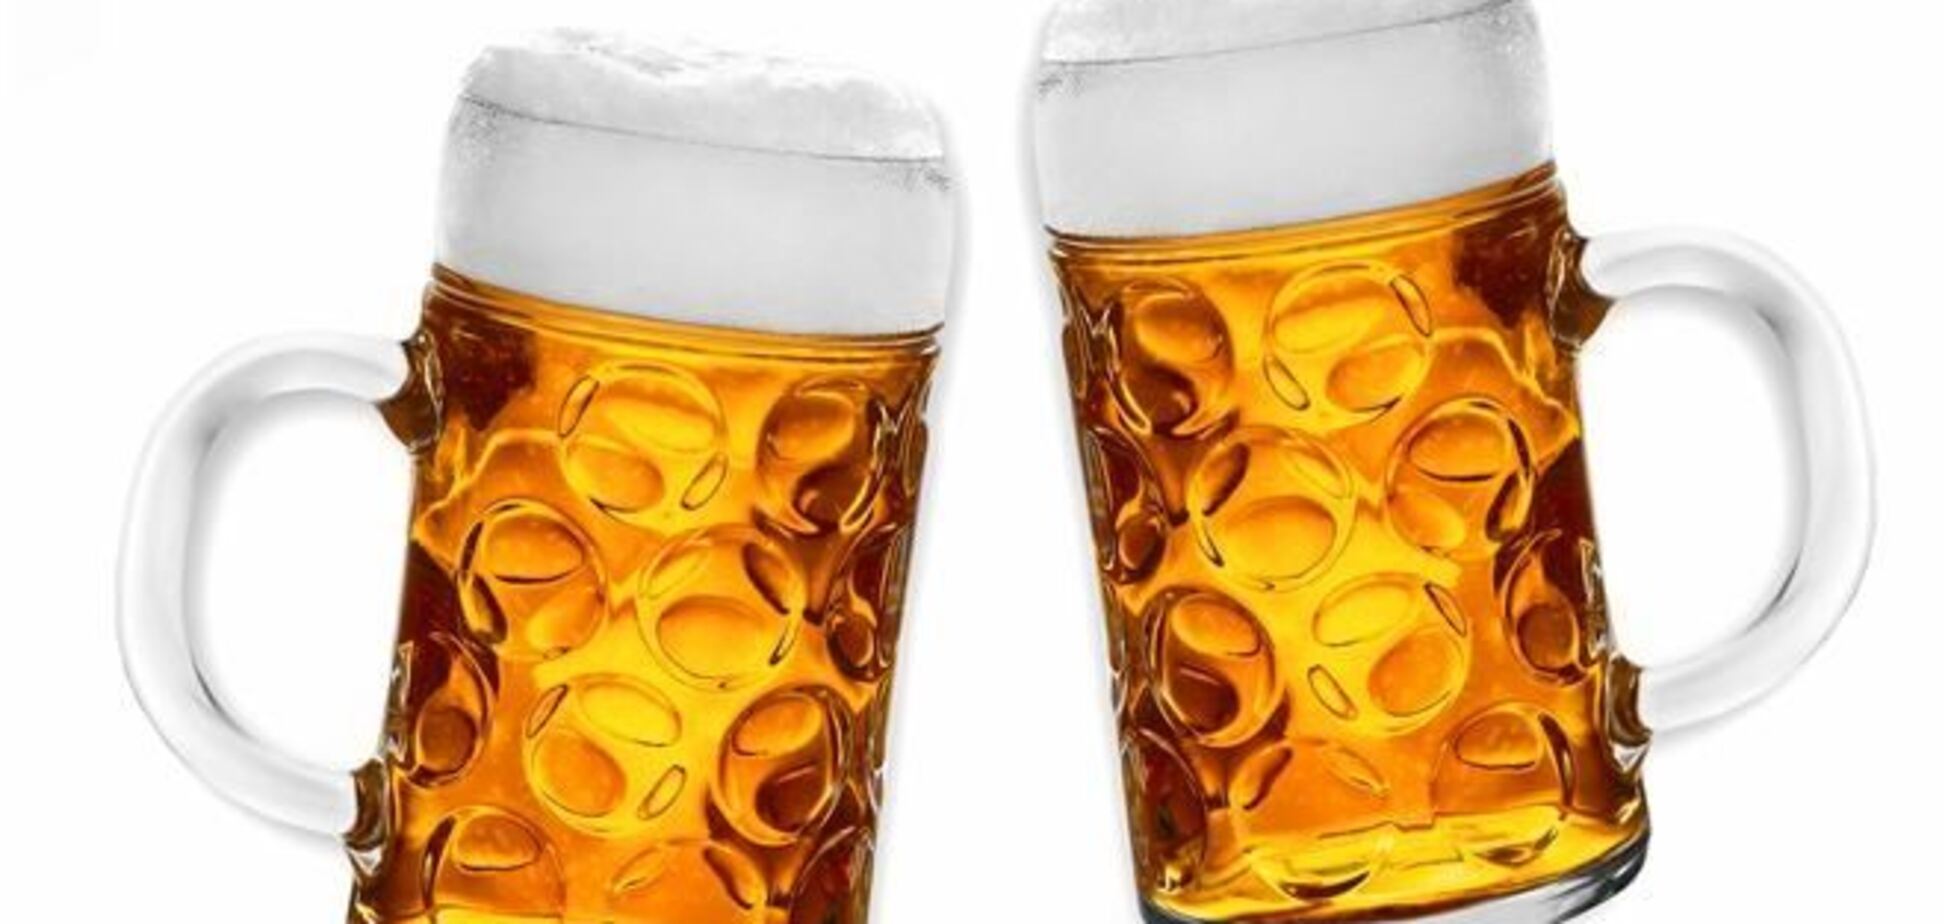 Производство пива в Украине в январе сократилось на 14%